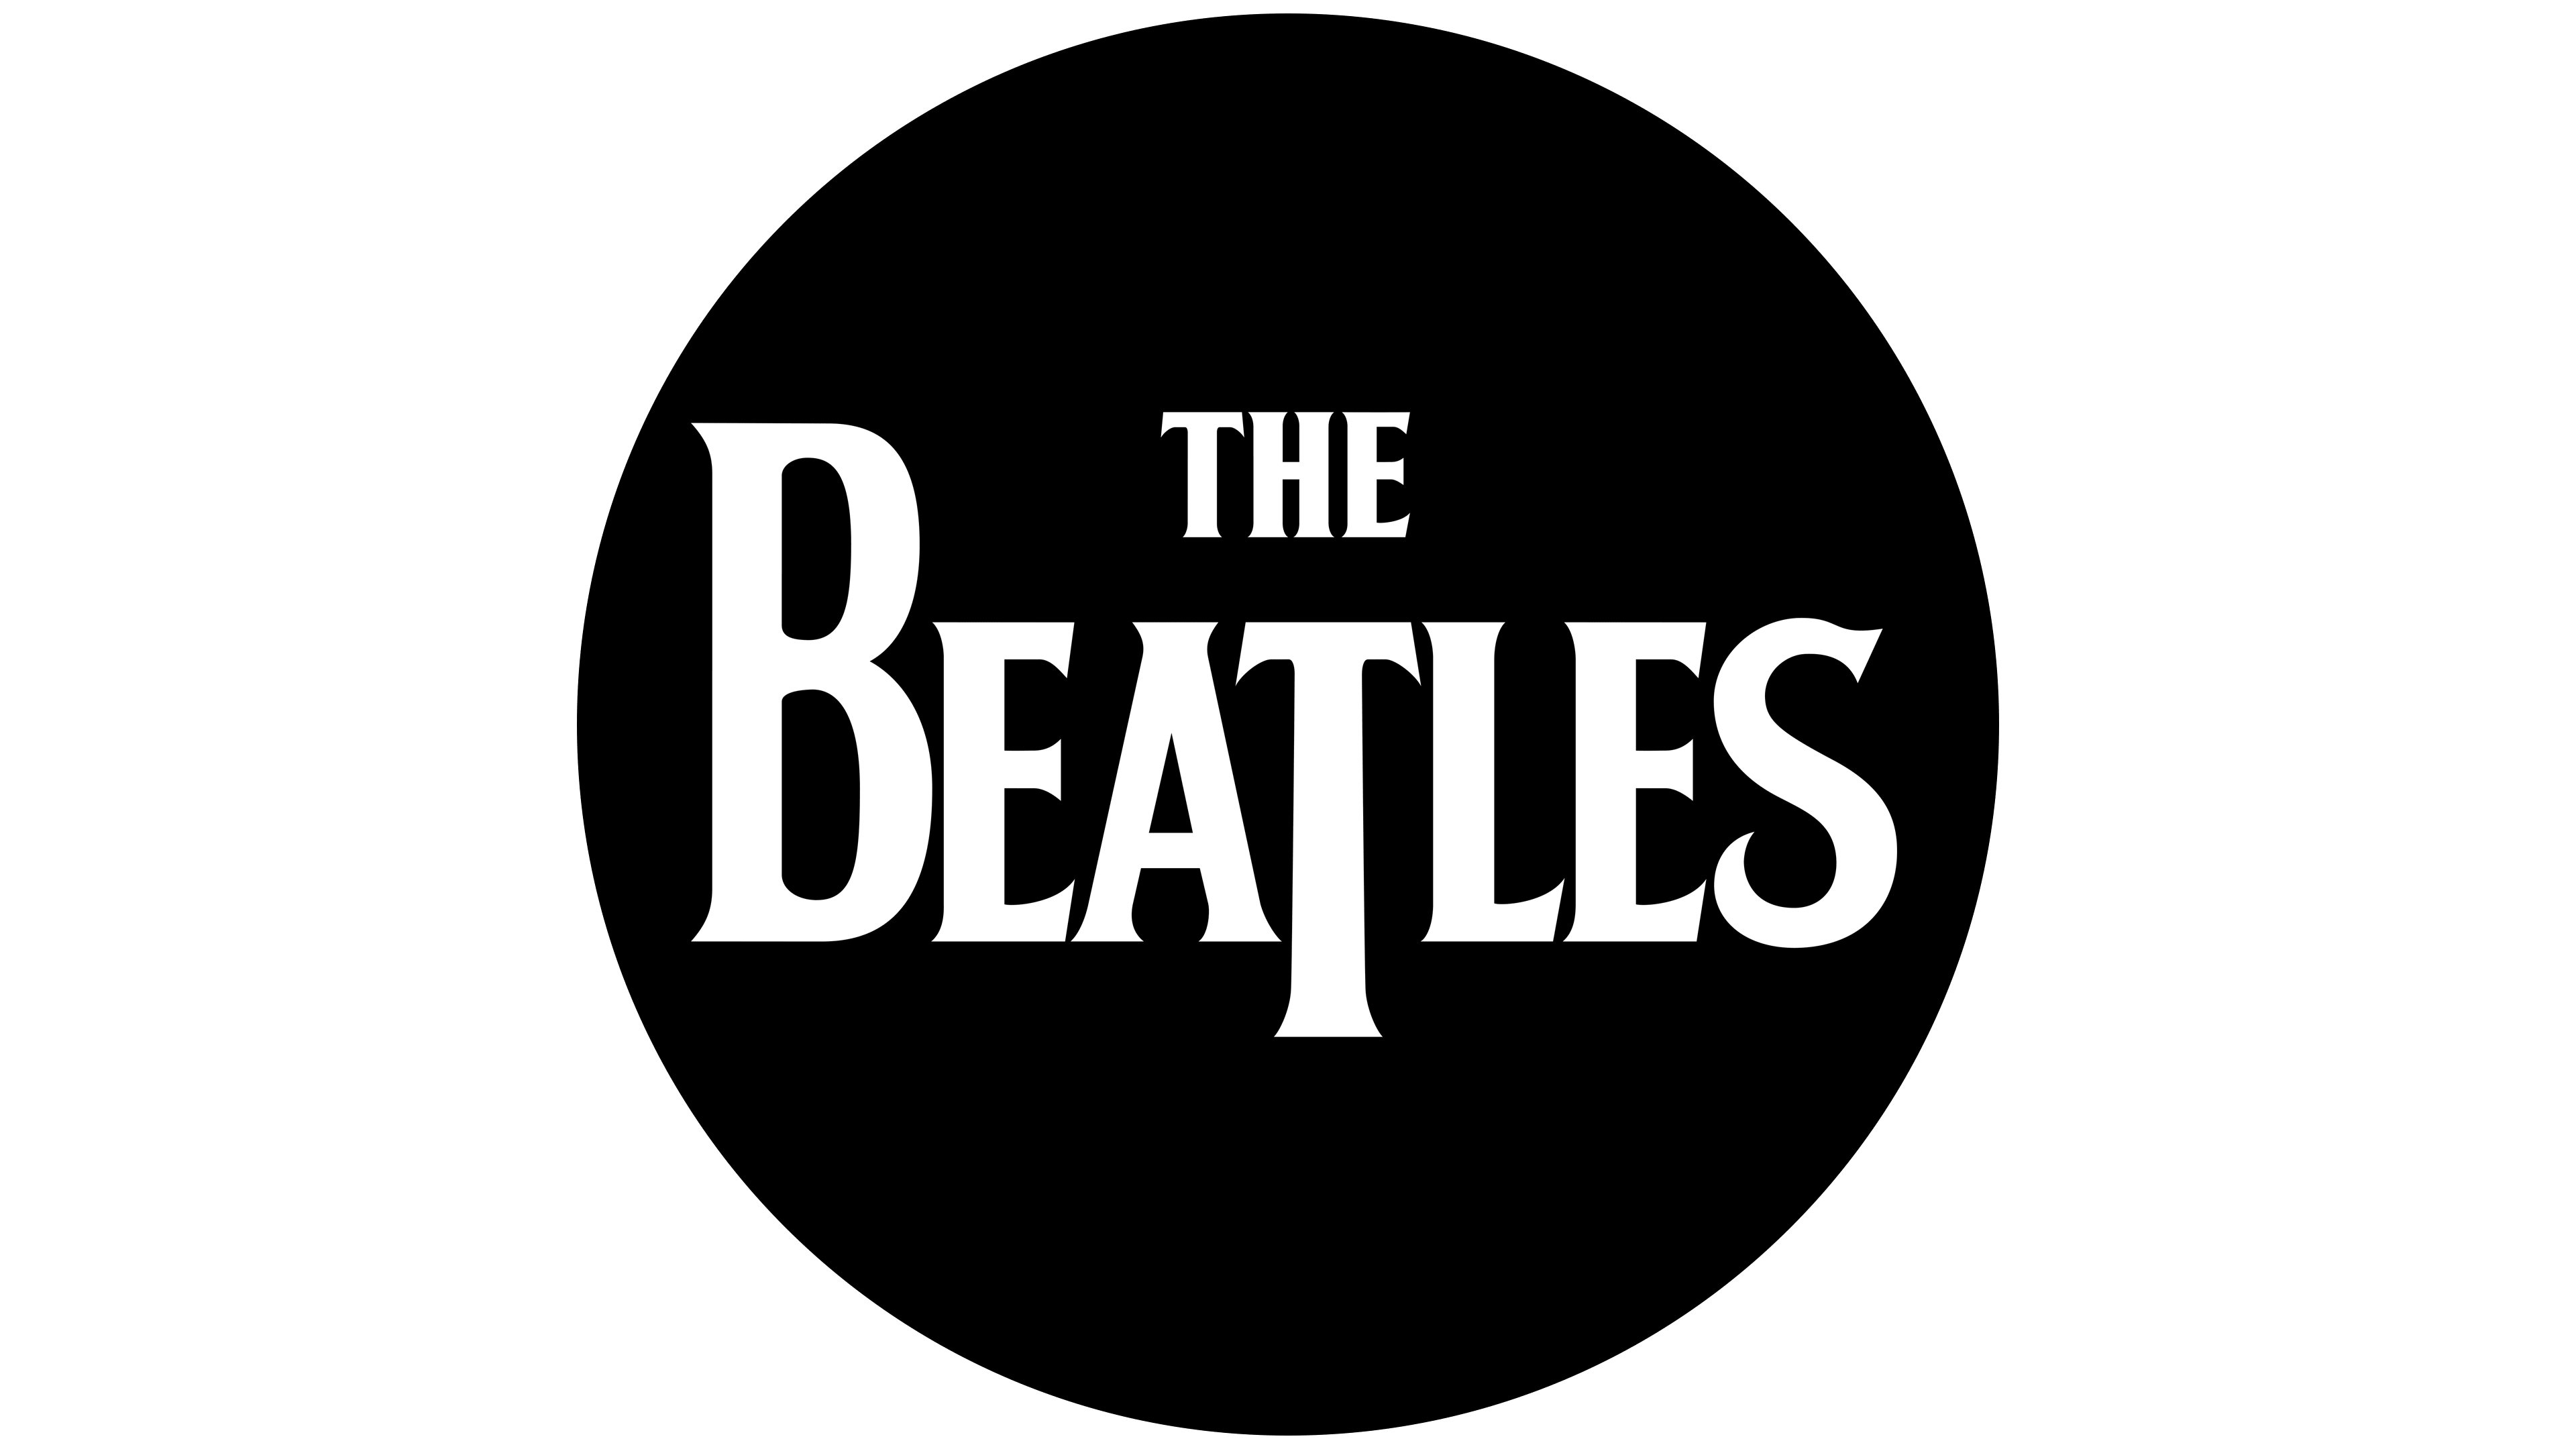 THE BEATLES. TOP 3  Beatles-Simbolo